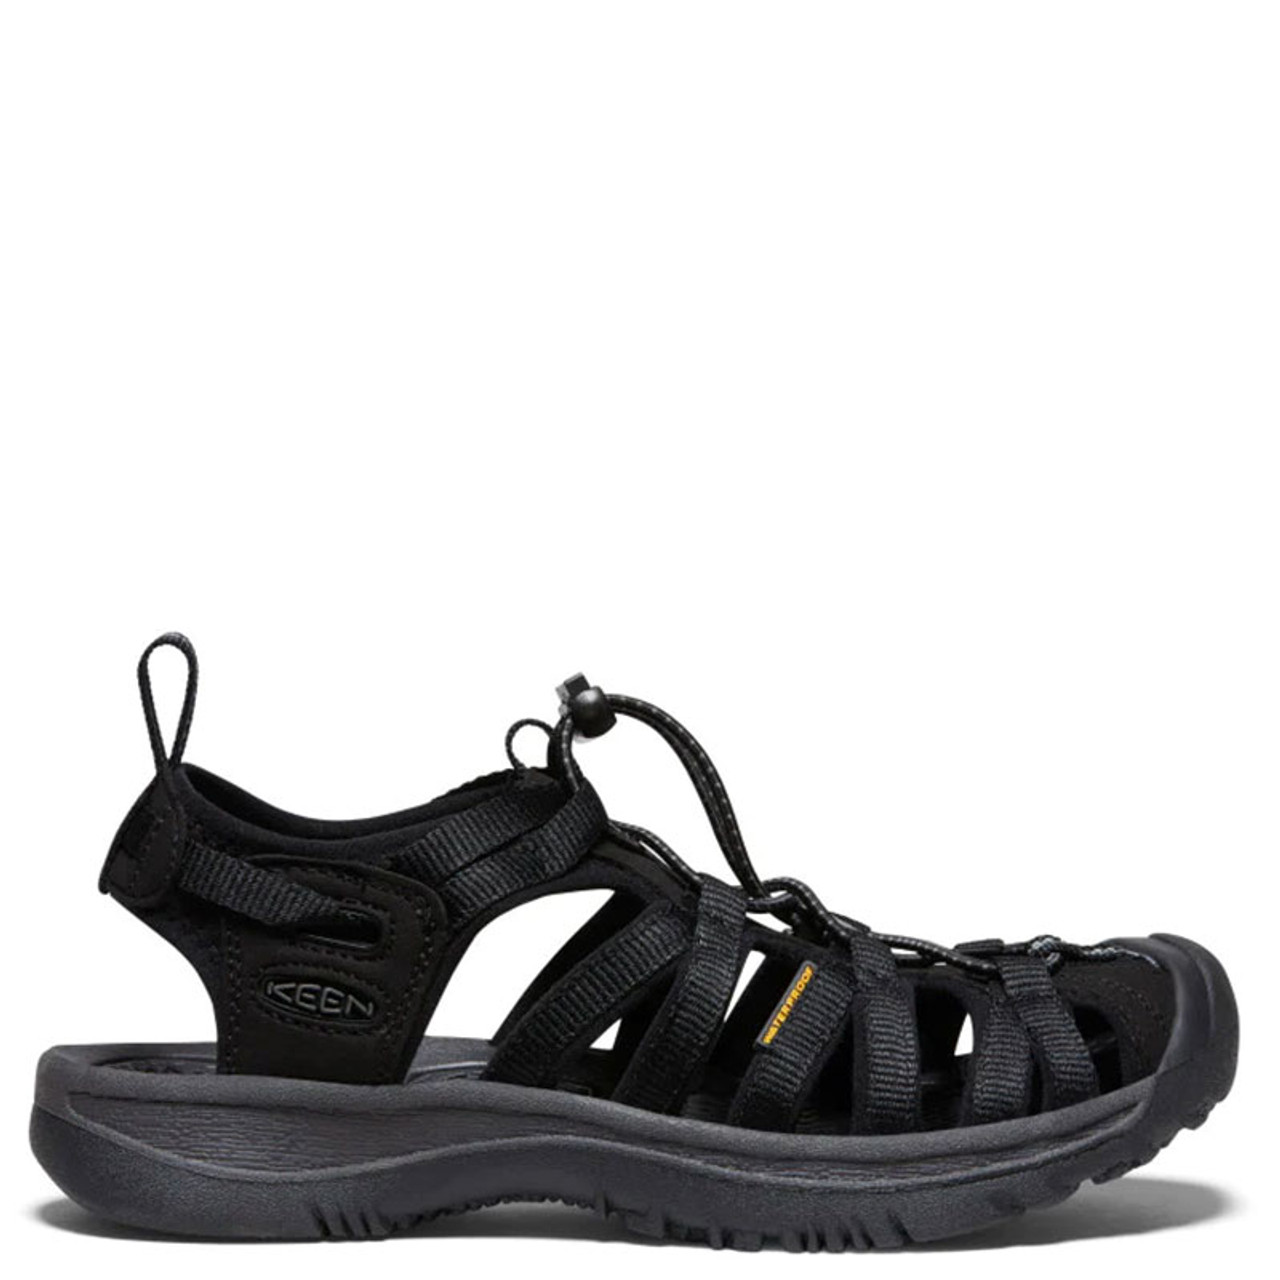 Keen Rose Sport Sandals (For Women) - Save 45%